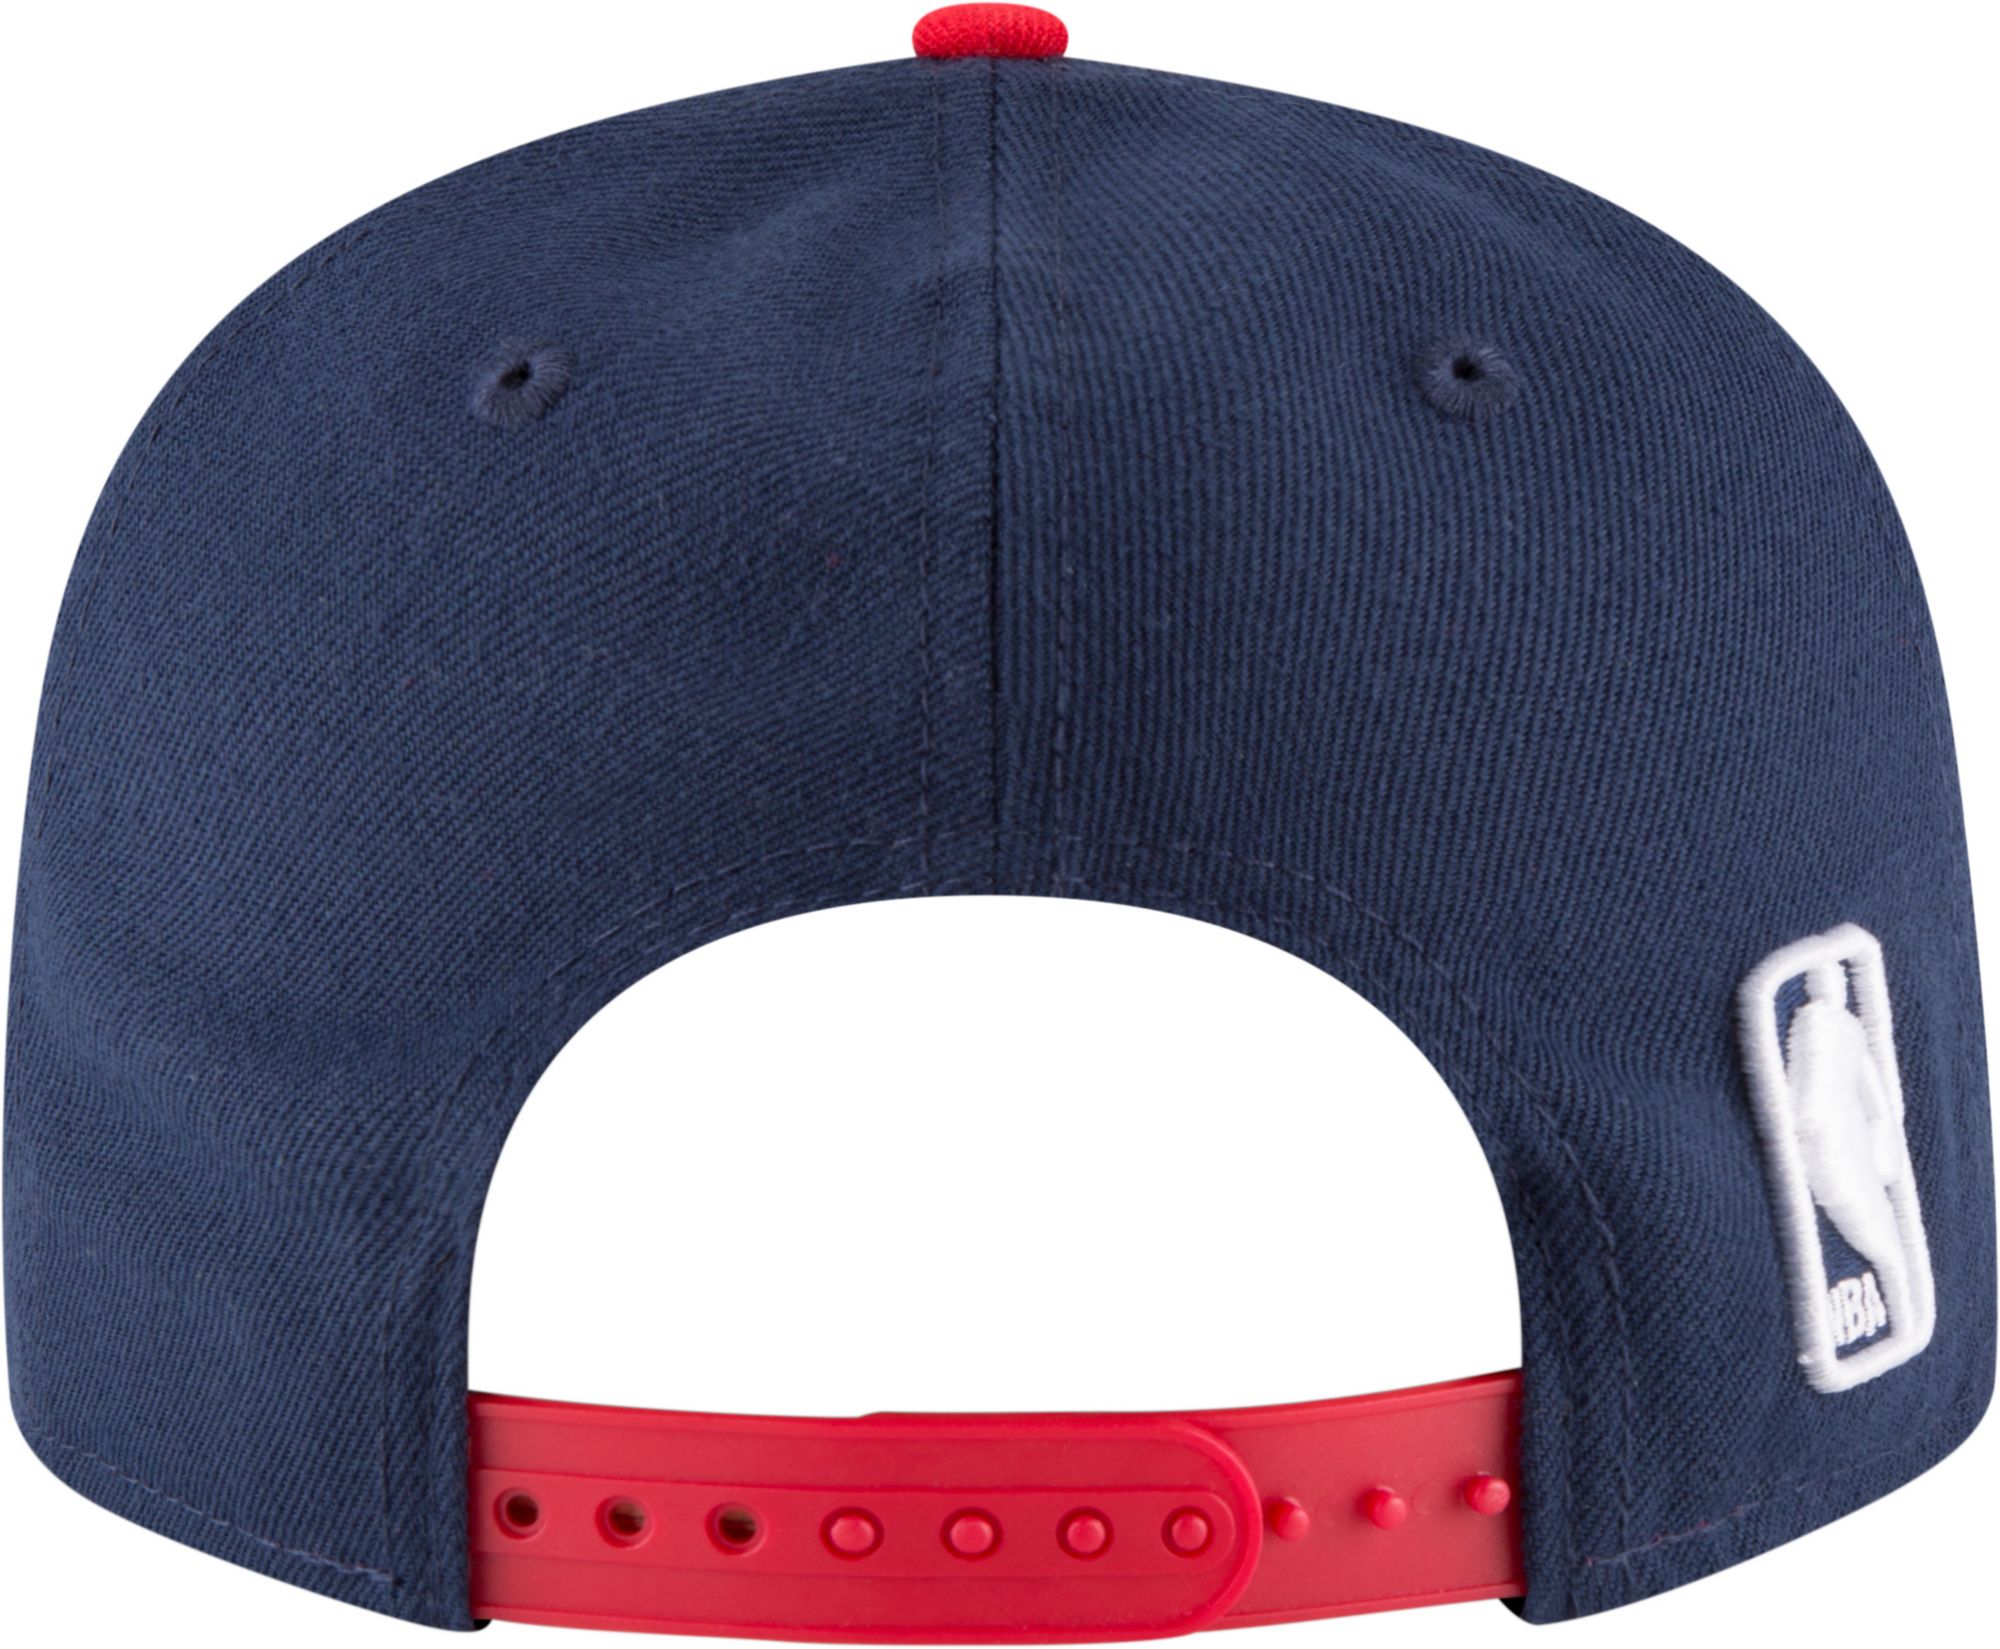 New Era Men's New Orleans Pelicans 9Fifty Adjustable Snapback Hat